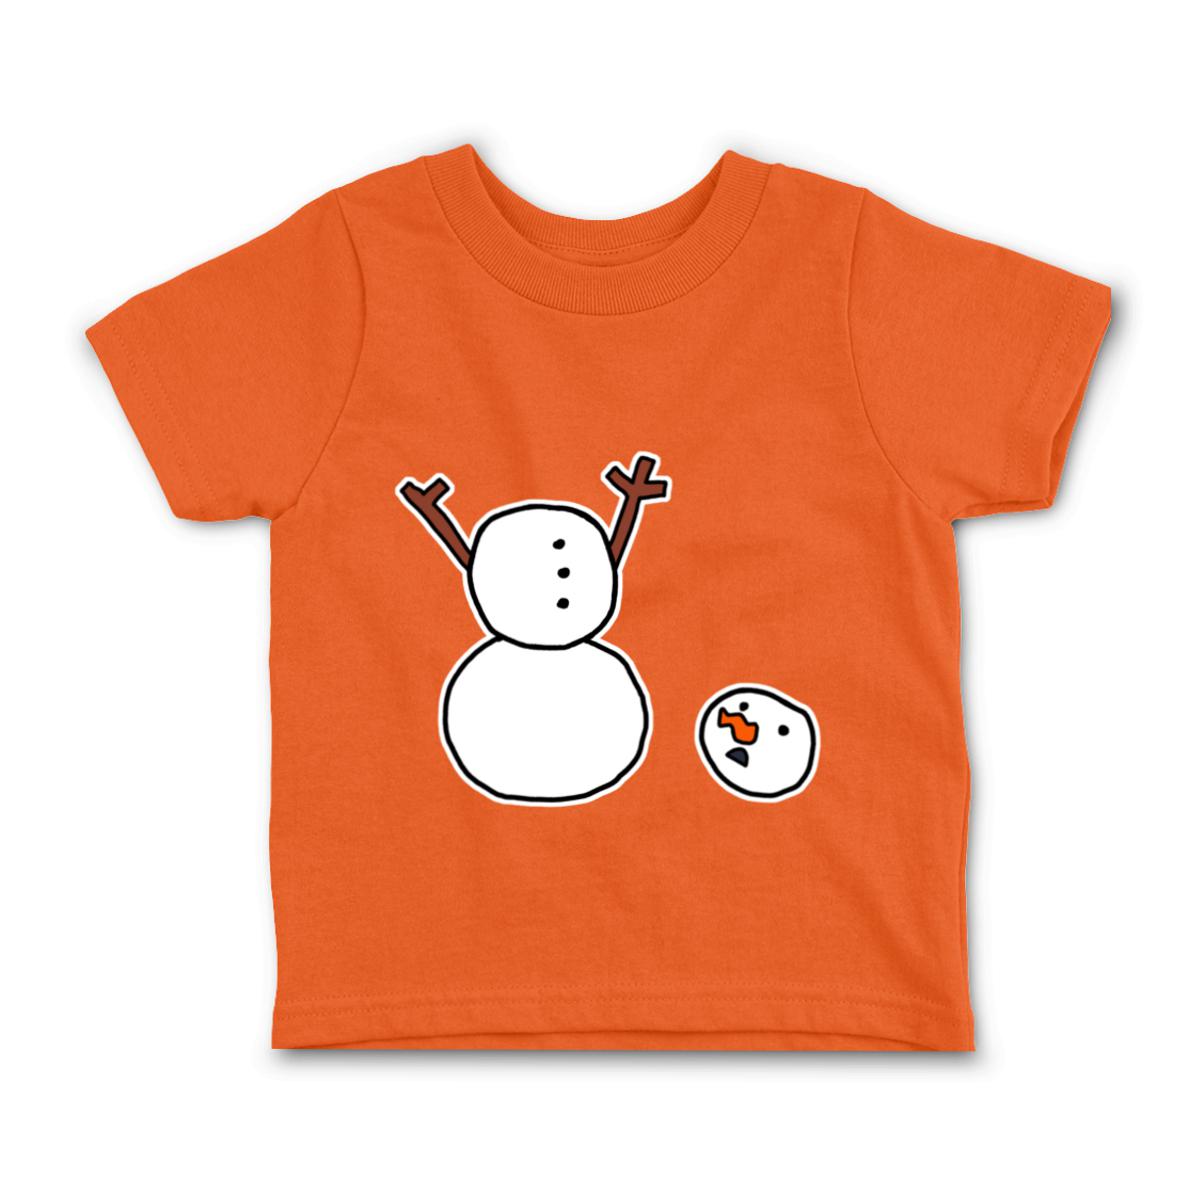 Headless Snowman Toddler Tee 4T orange